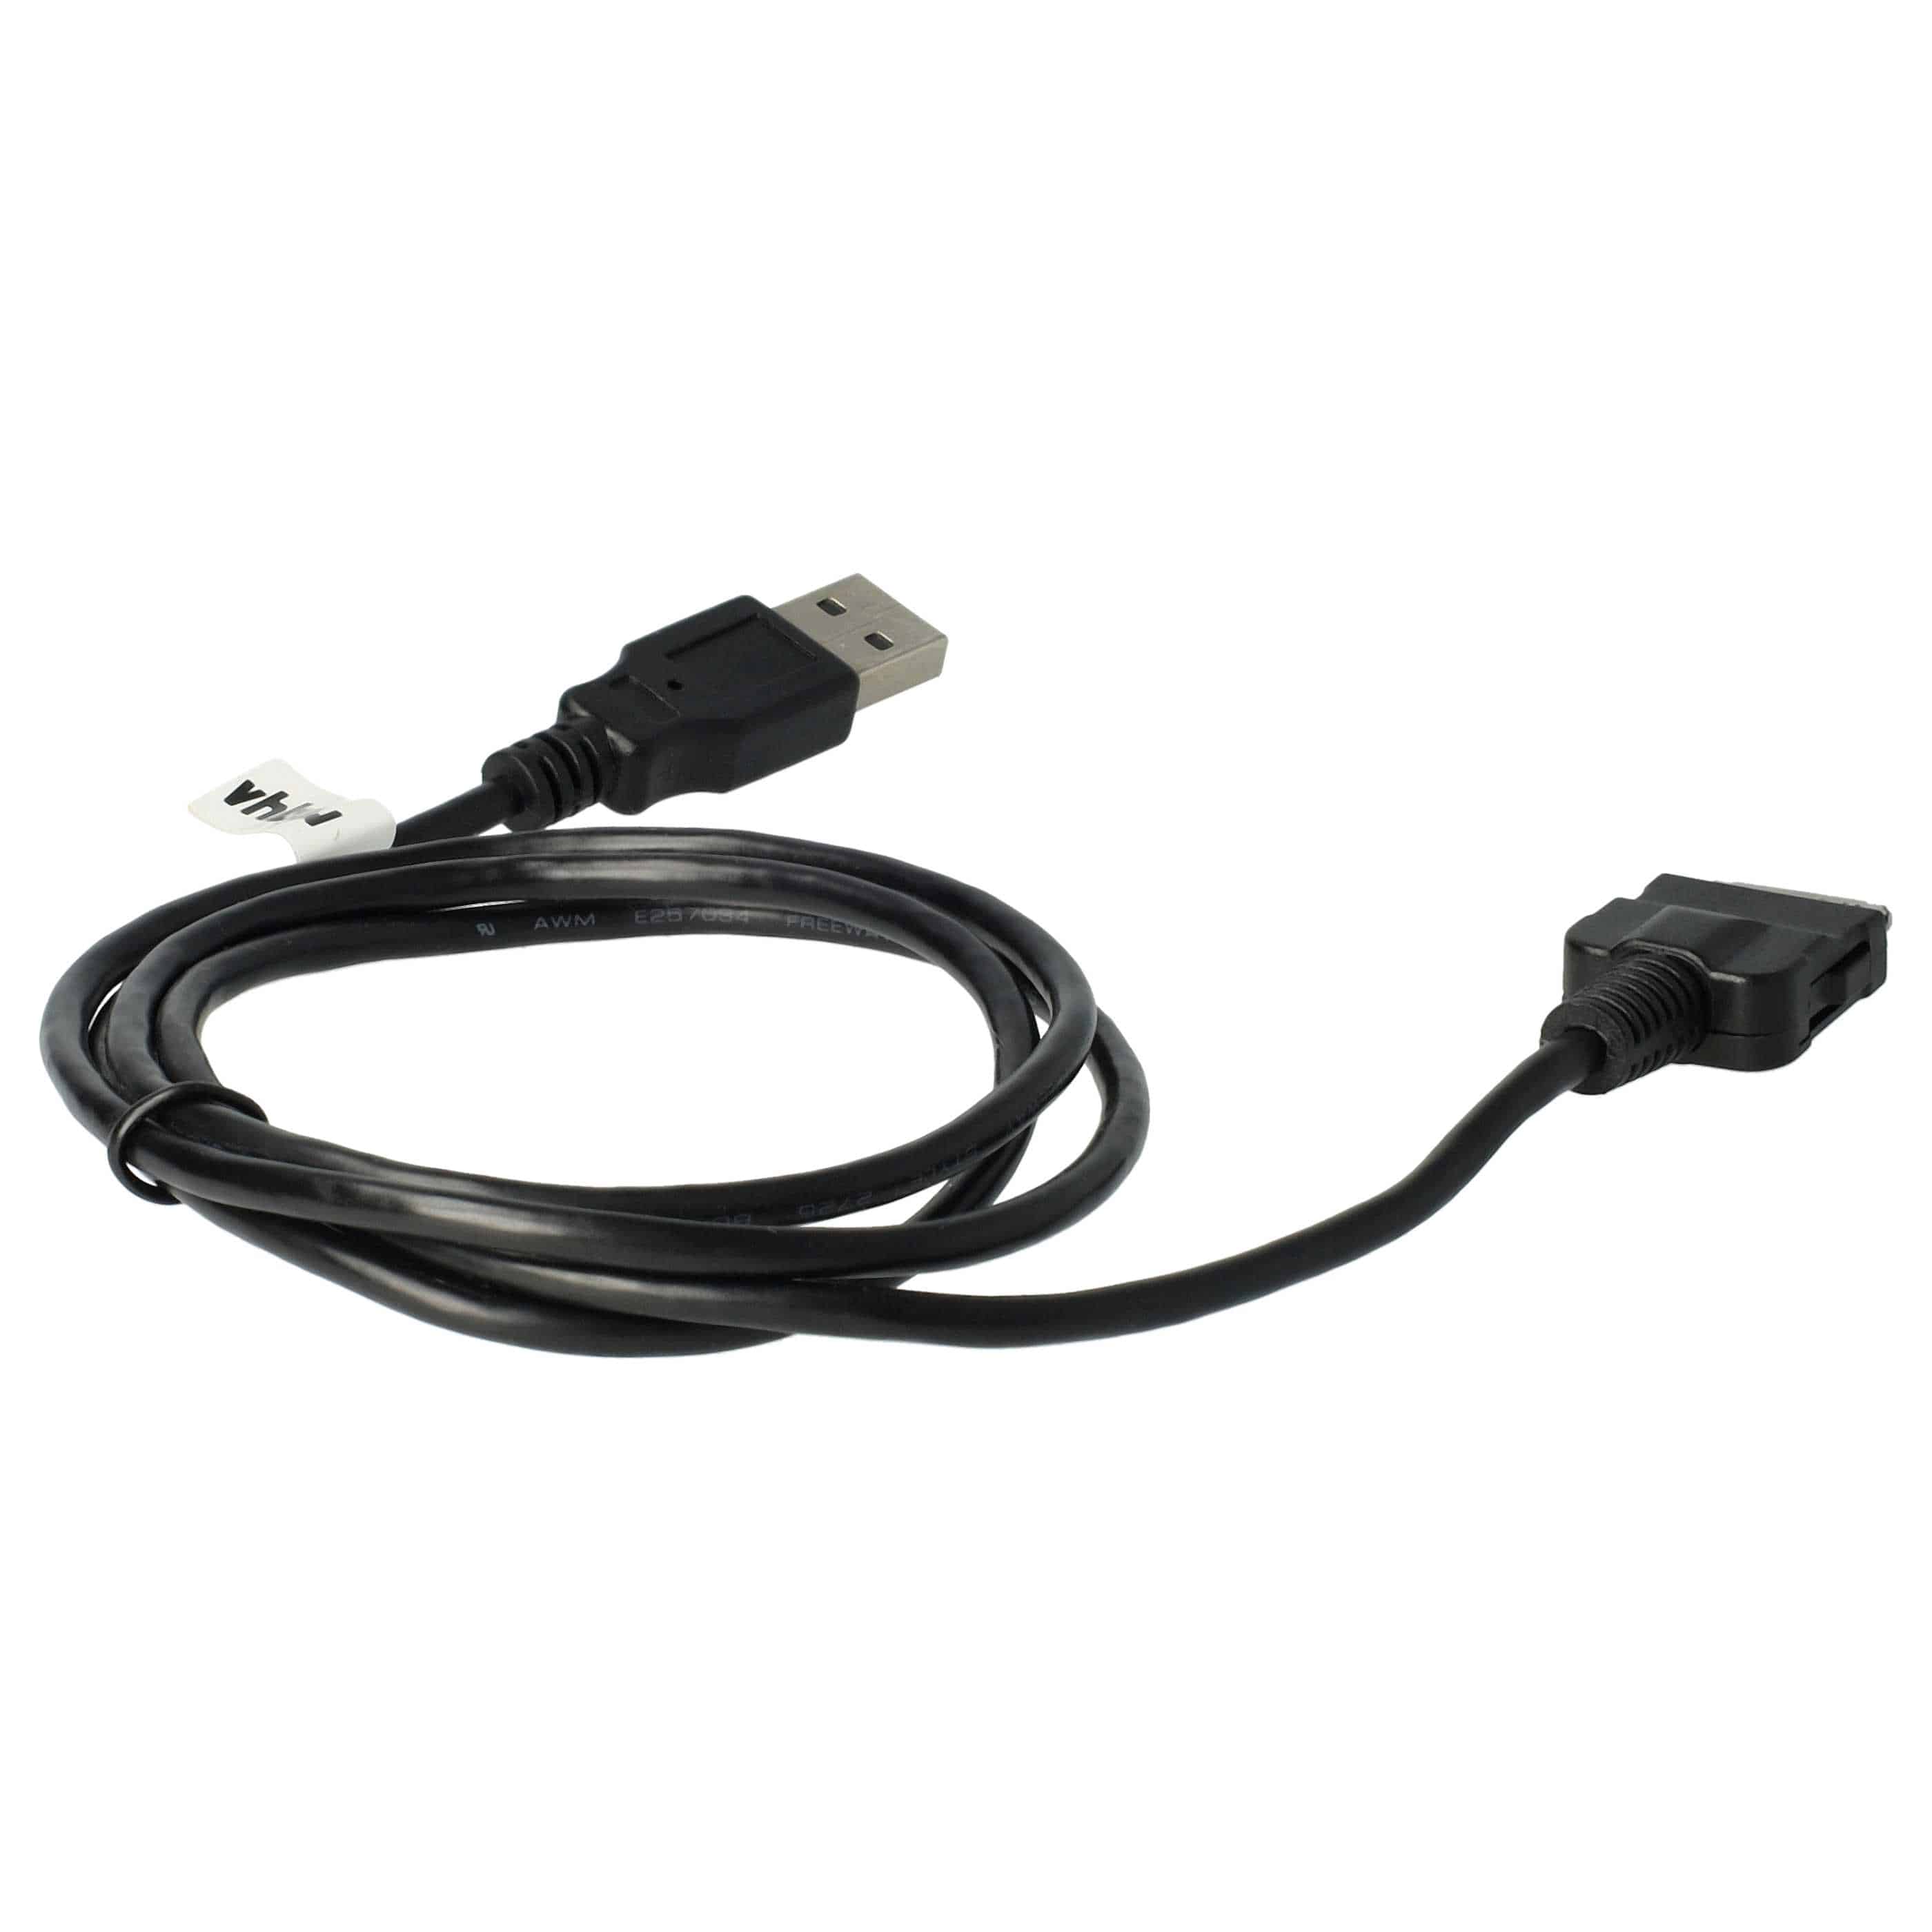 Cable de datos USB compatible con Iriver H10 1GB, etc., 100 cm